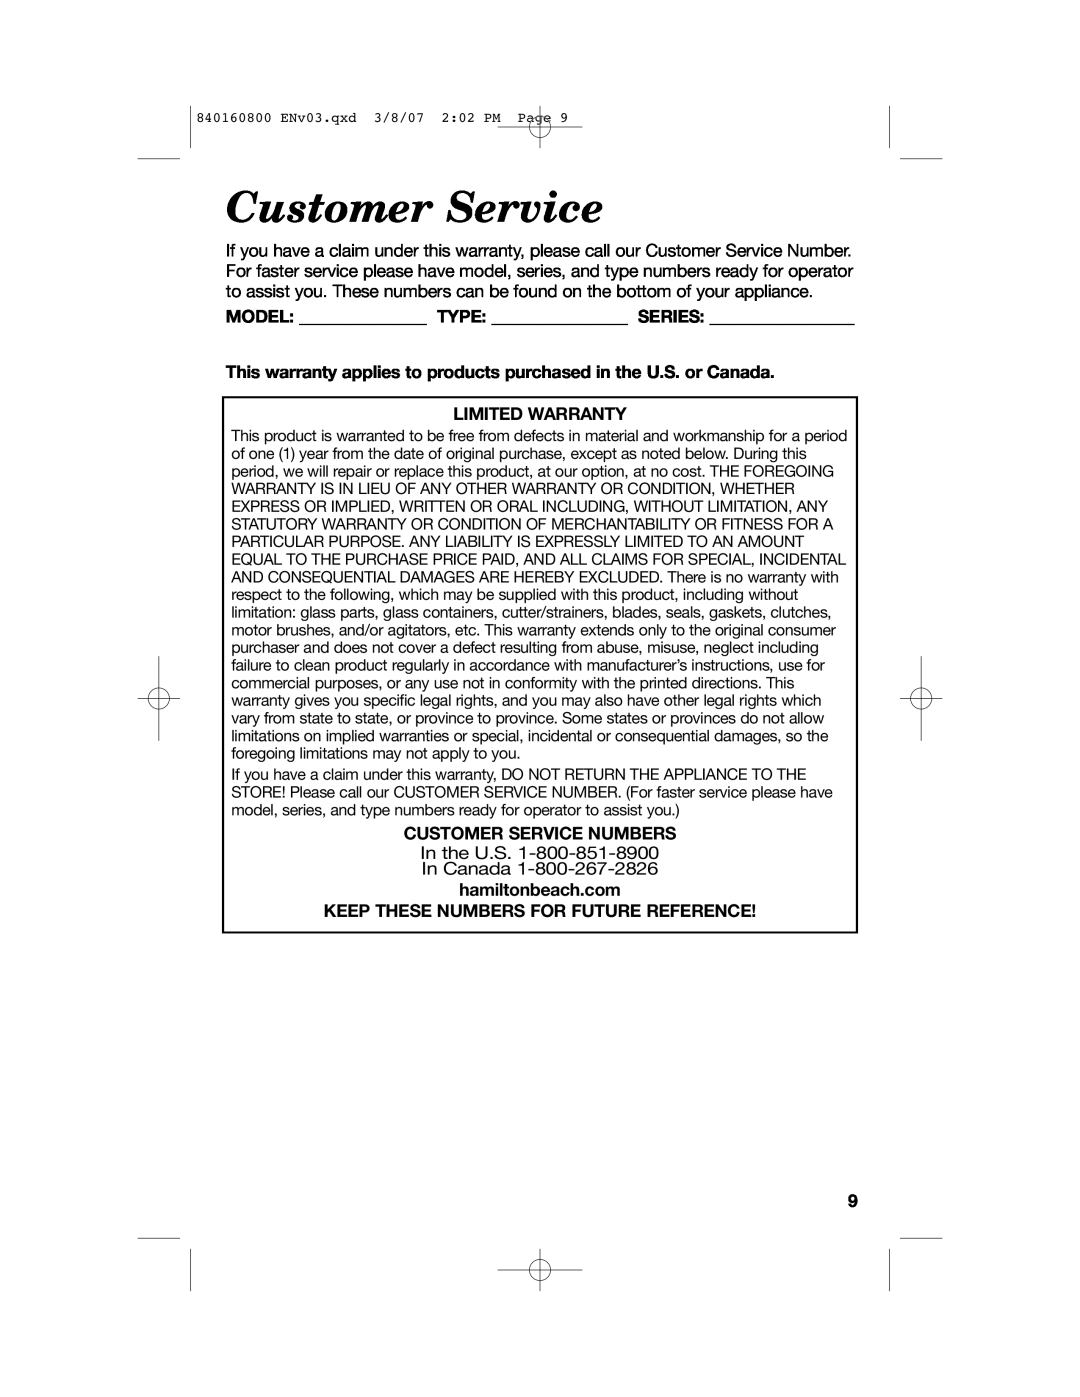 Hamilton Beach 840160800 manual Model Type Series, Limited Warranty, Customer Service Numbers 